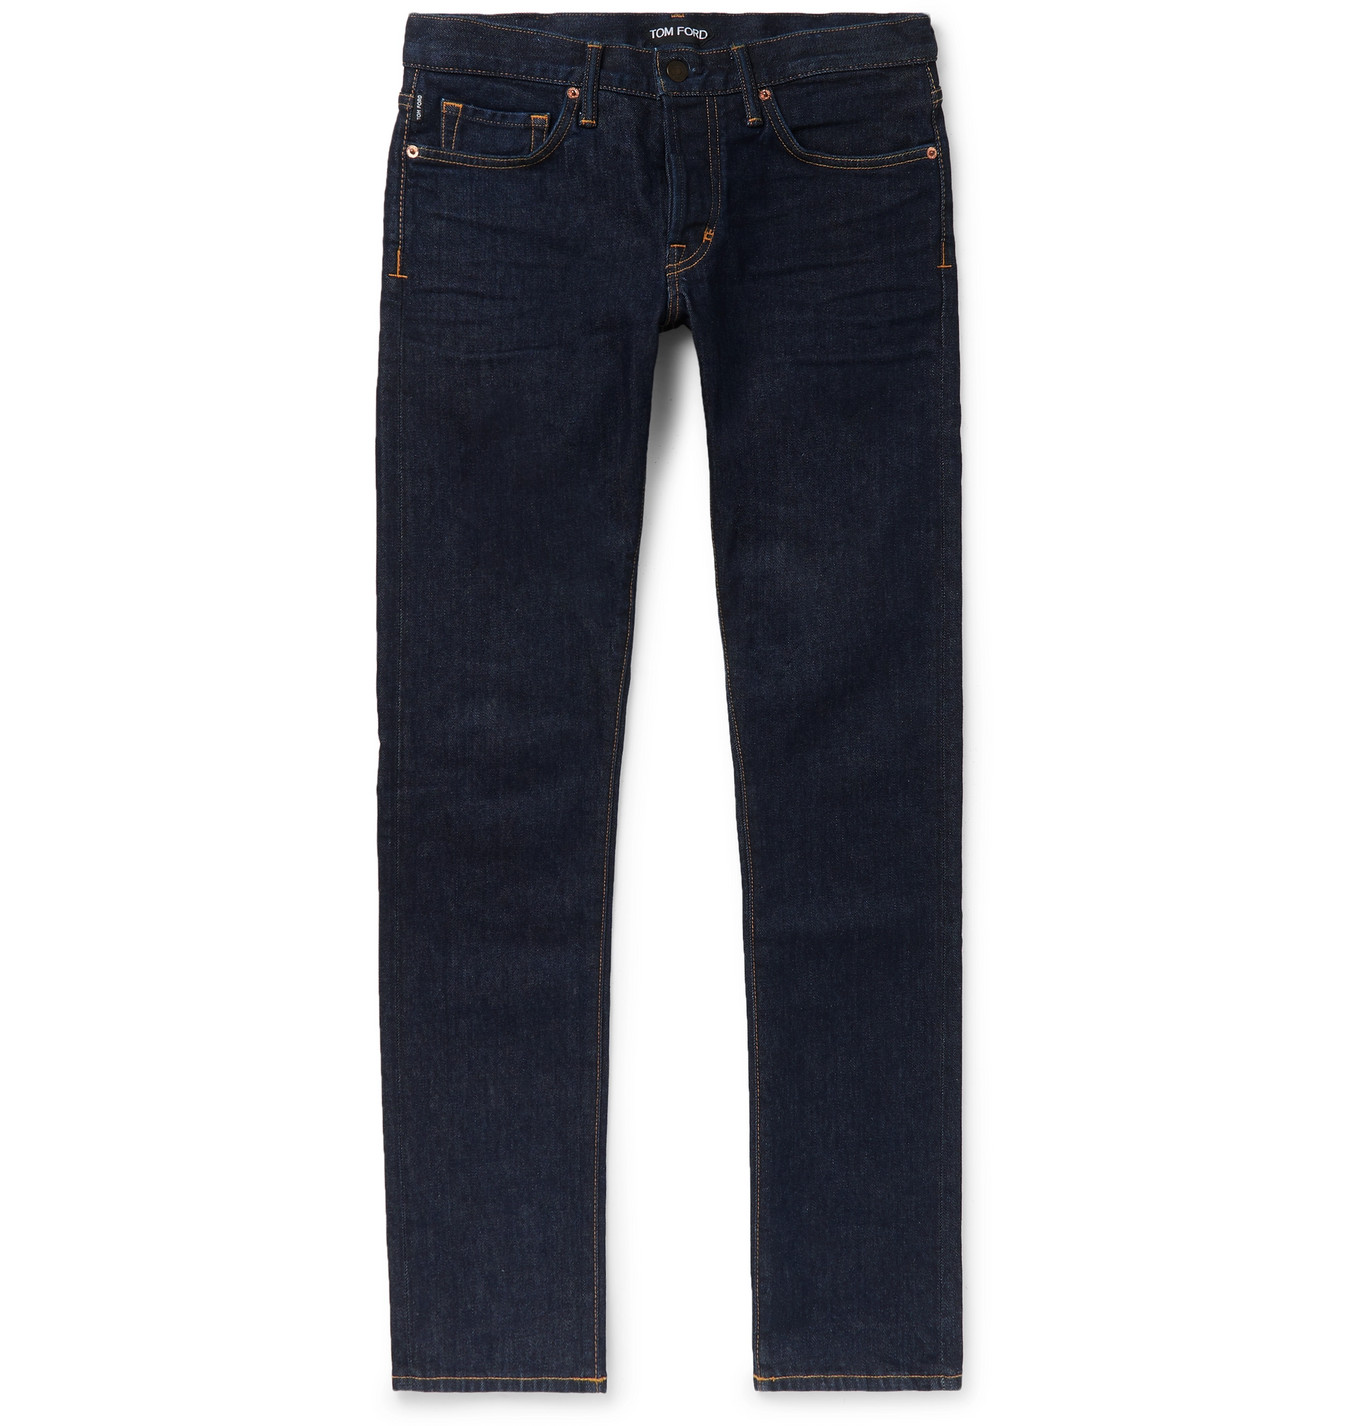 TOM FORD - Slim-Fit Stretch-Denim Jeans - Men - Blue | The Fashionisto